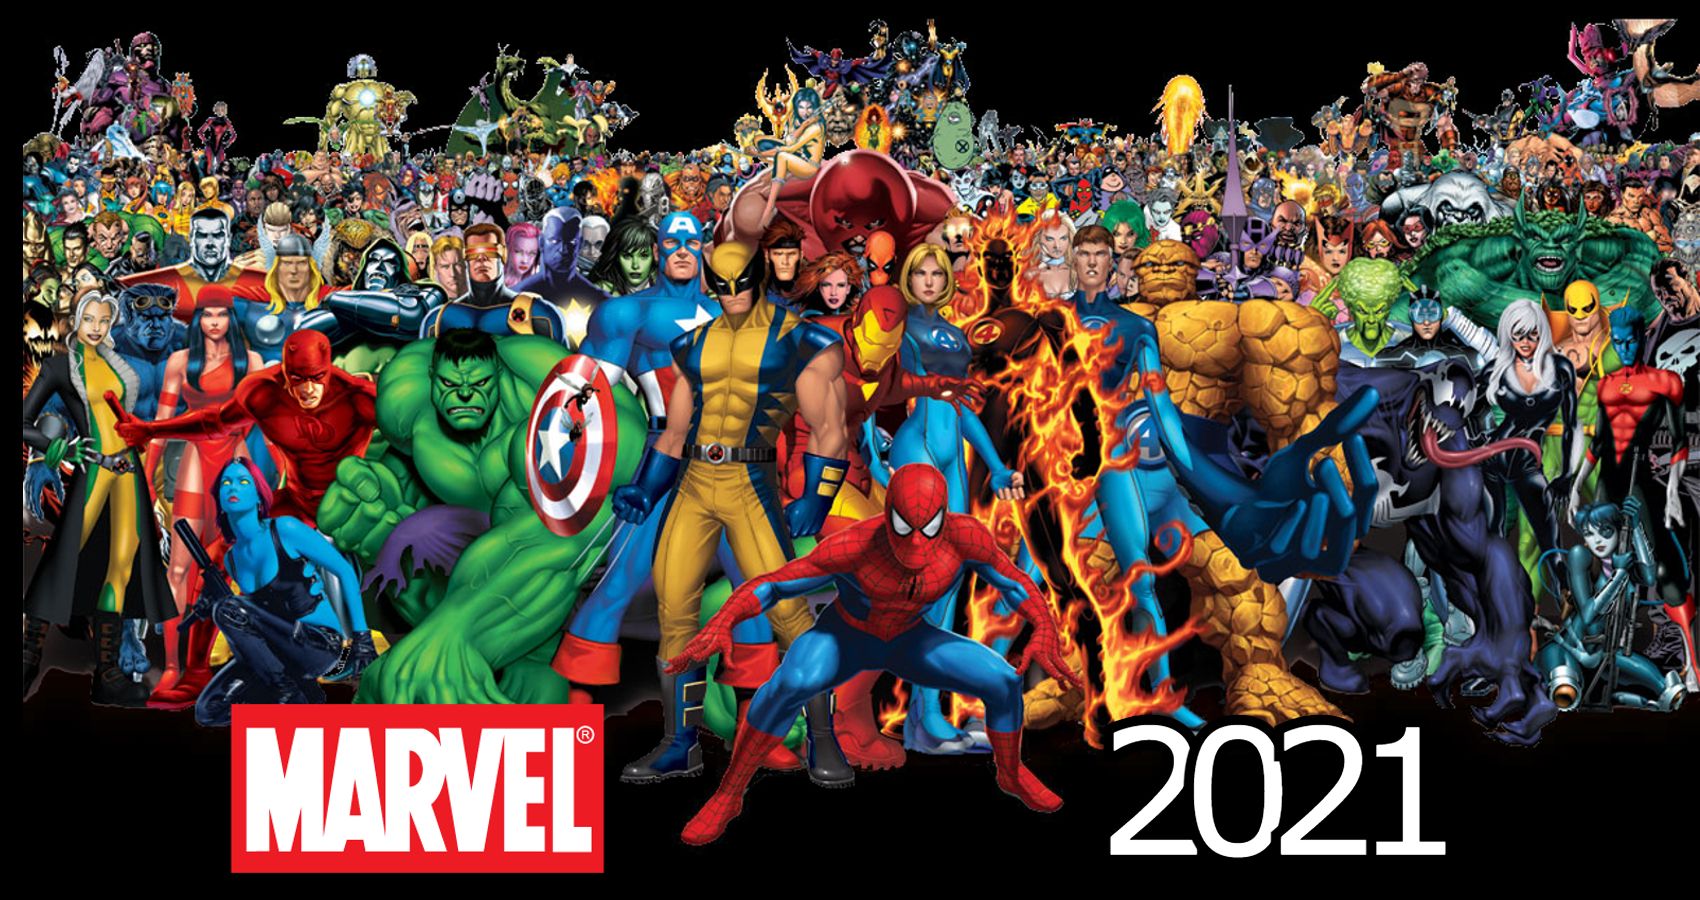 Marvel Comics in 2021